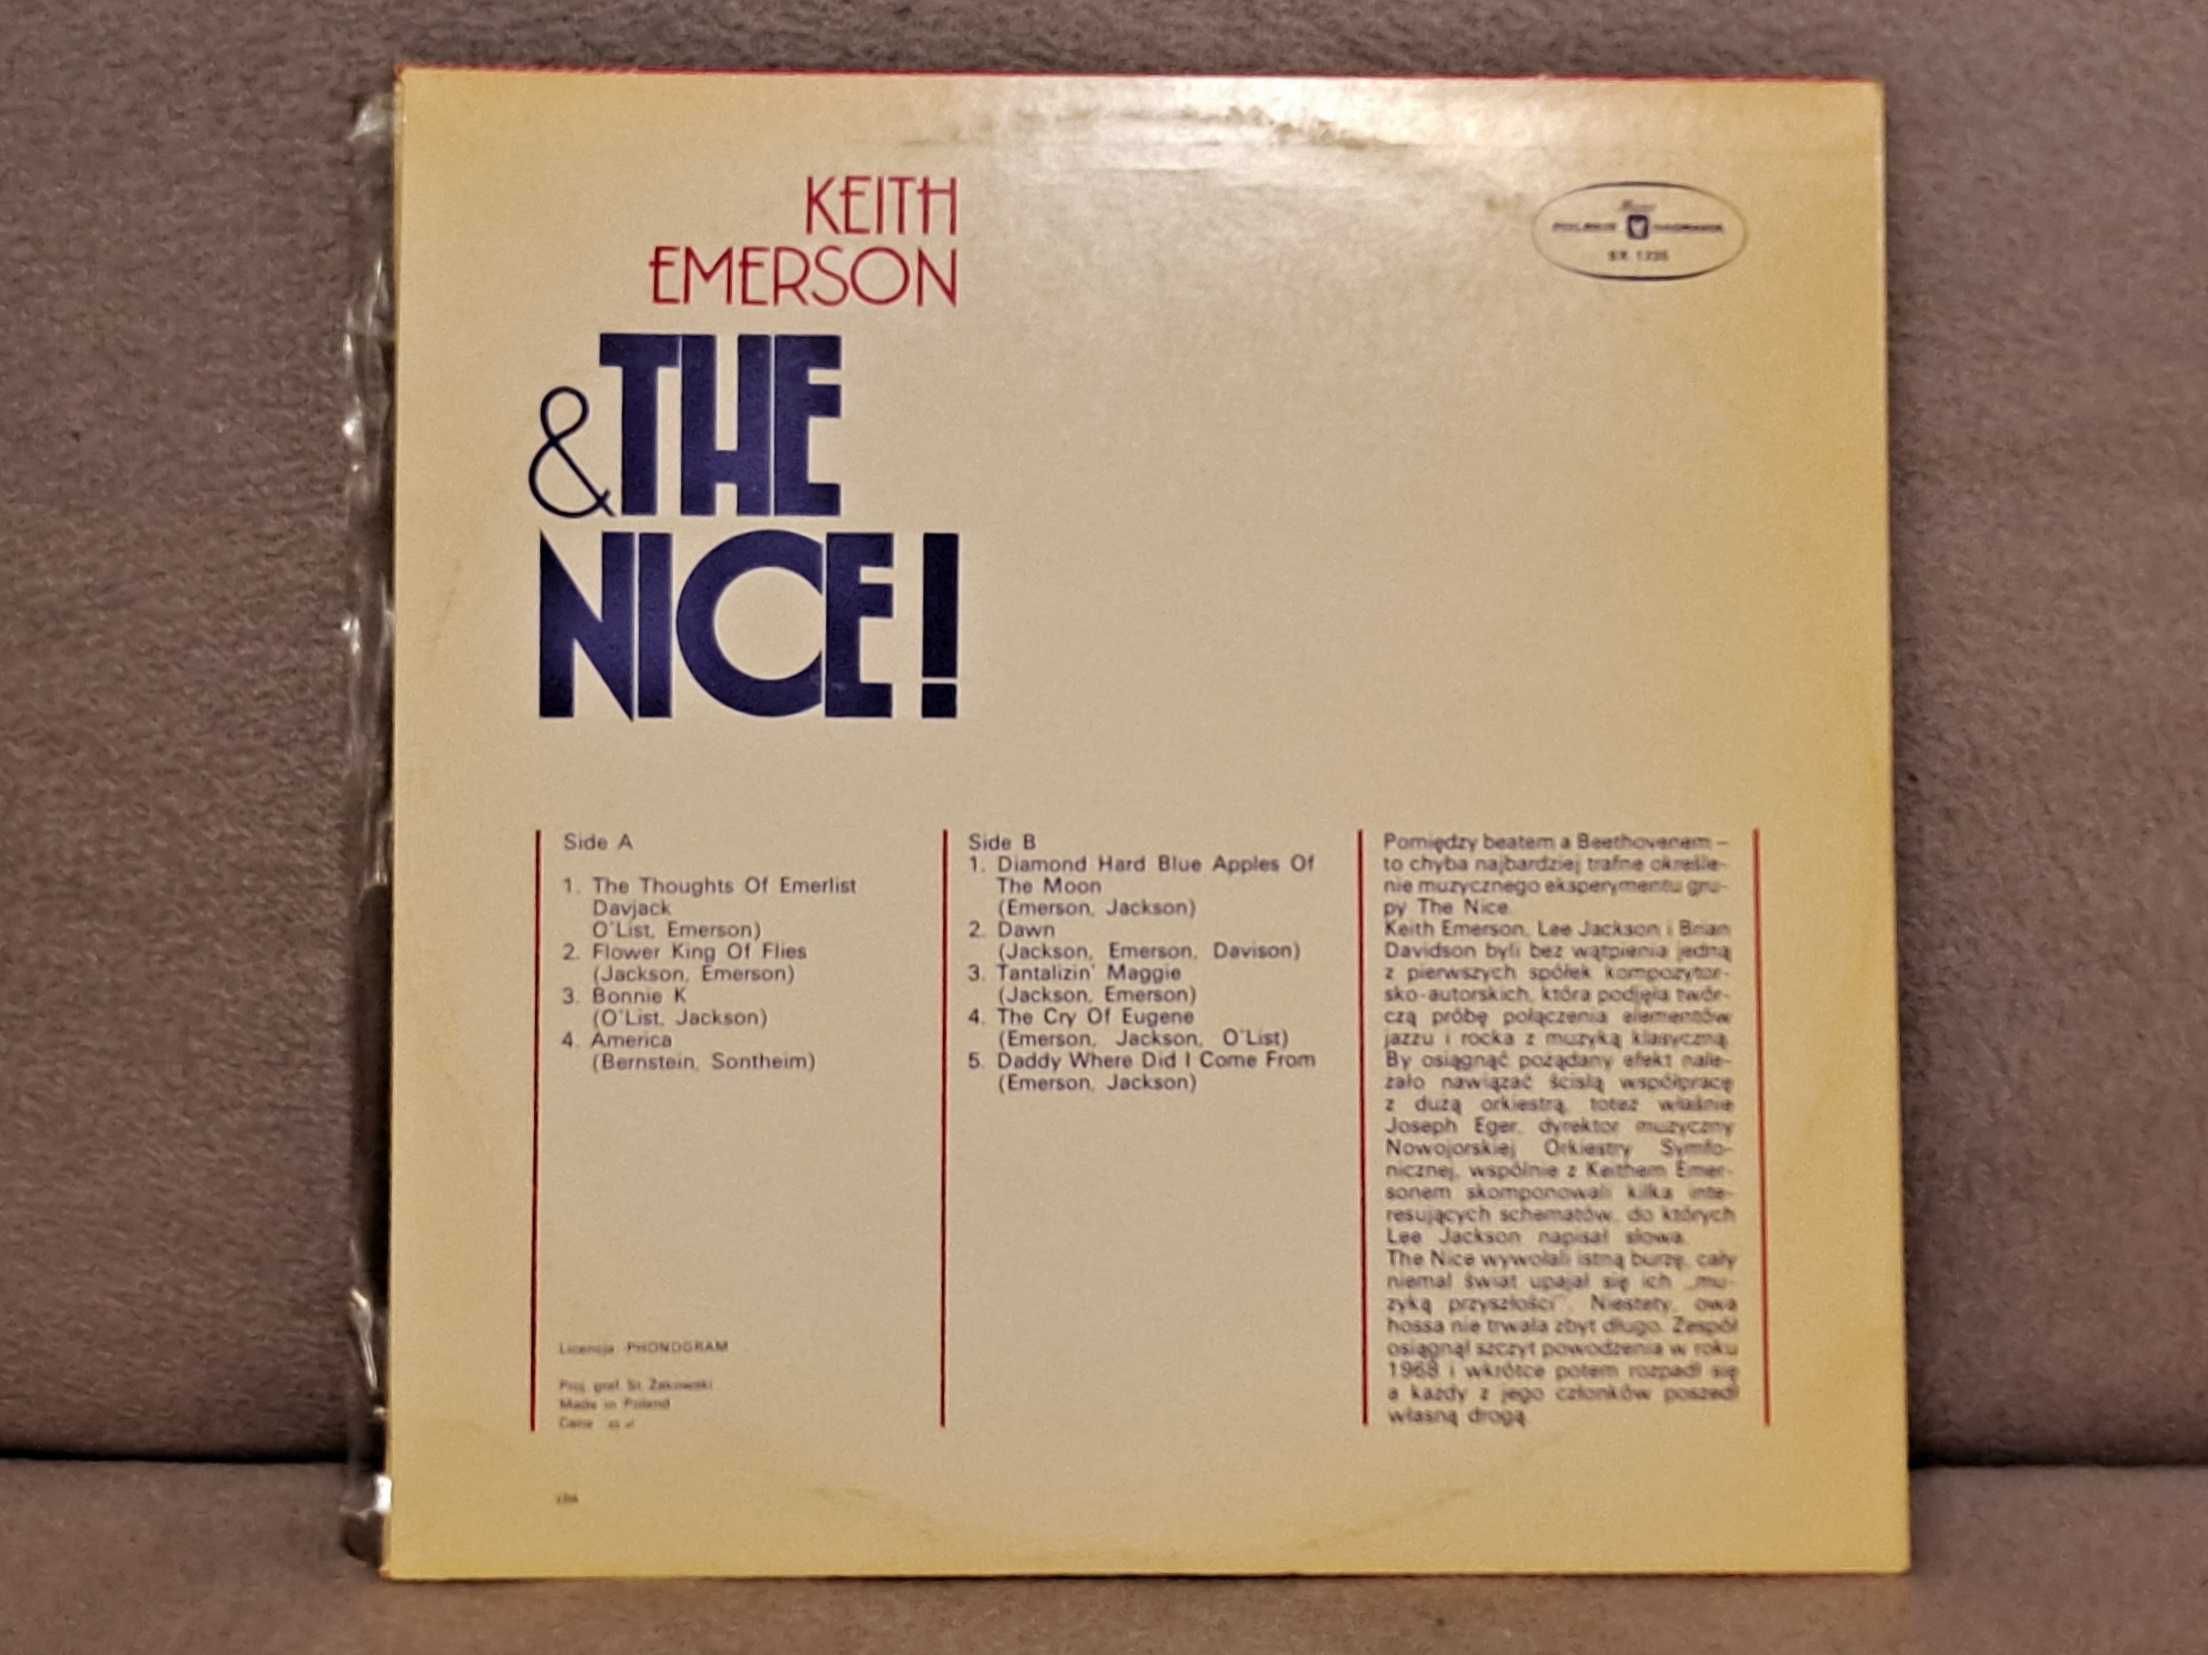 płyta winylowa - KEITH EMERSON & The Nice – Muza SX 1235 - 1975 r.